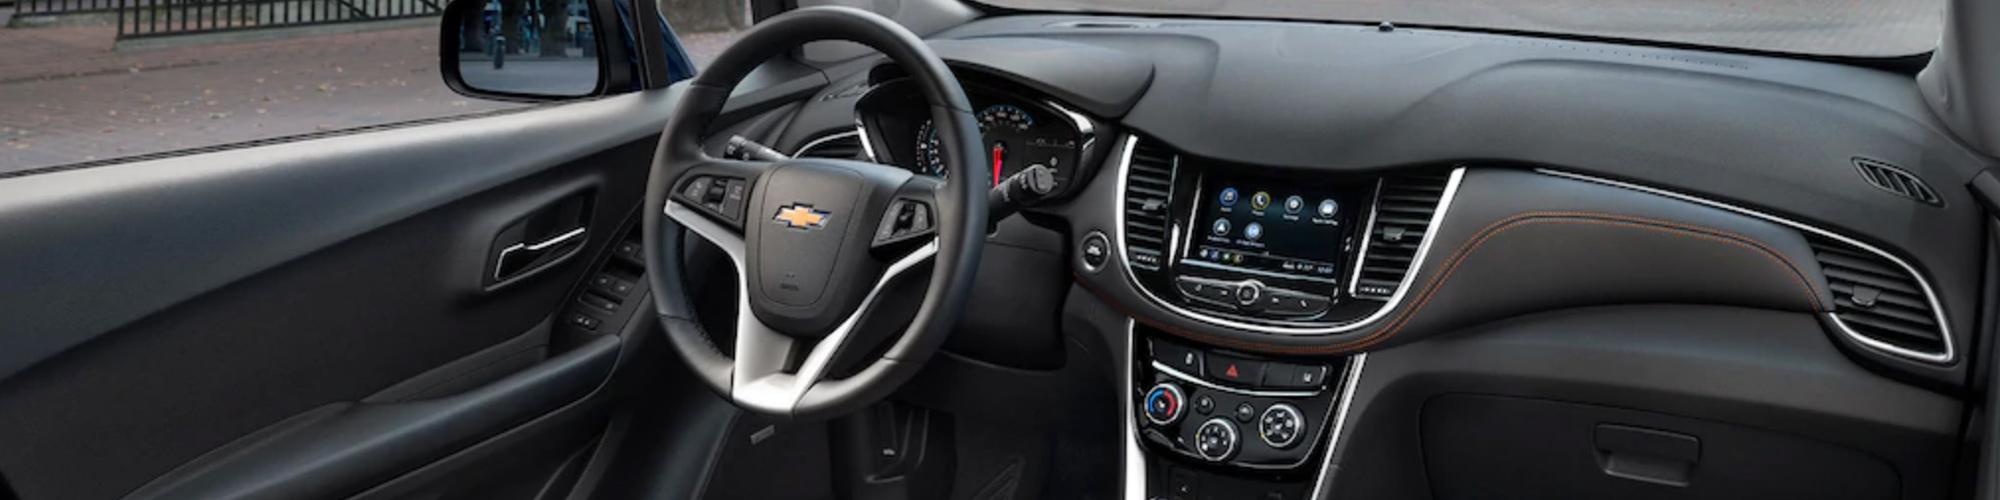 2019 Chevrolet Trax Interior